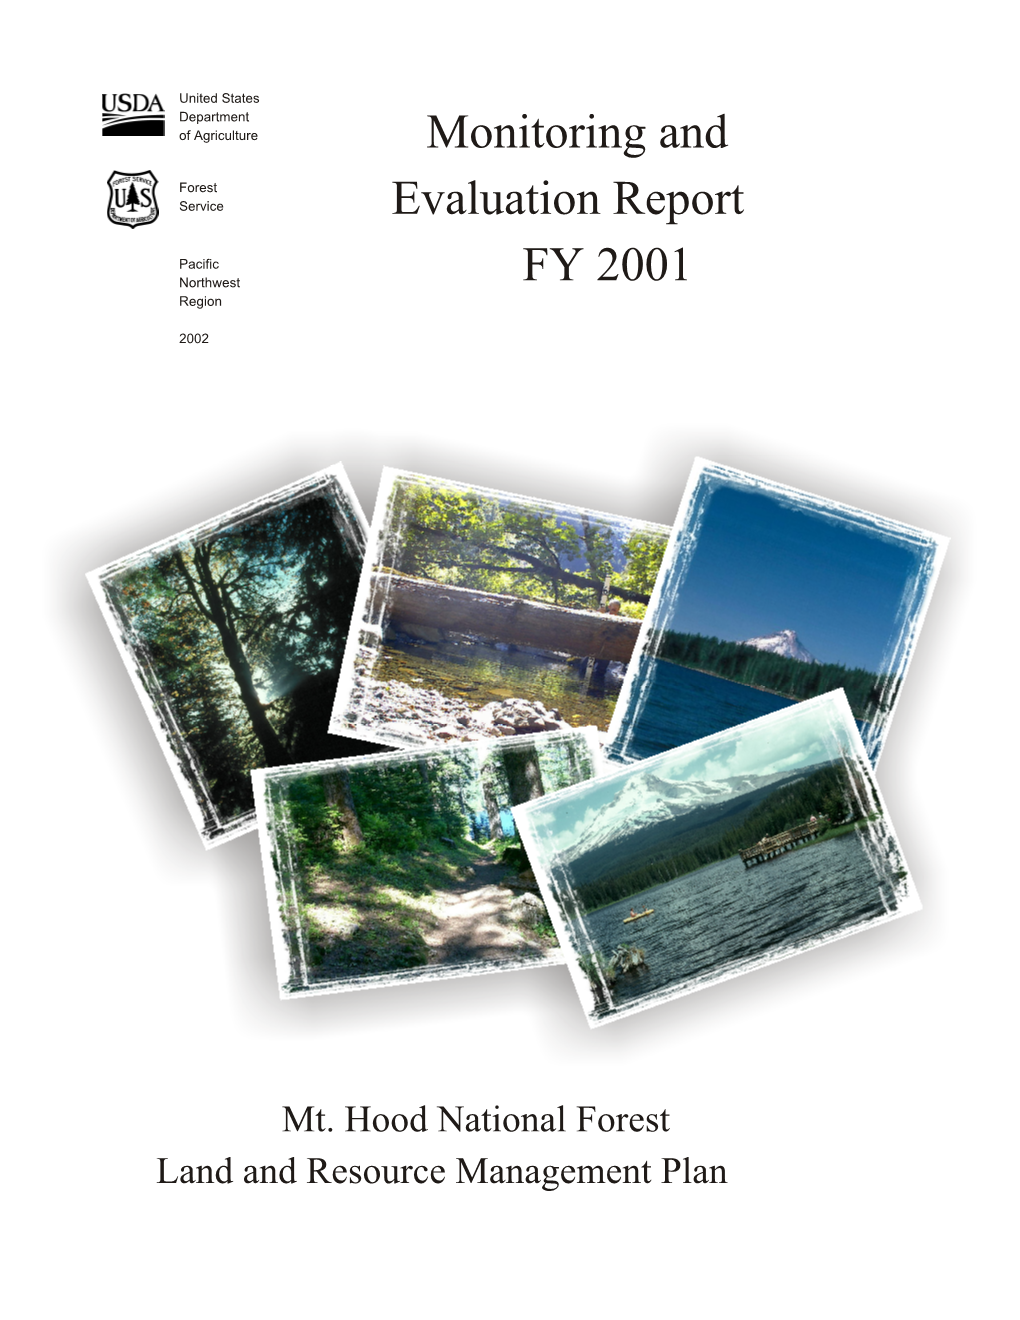 2001 Monitoring Report